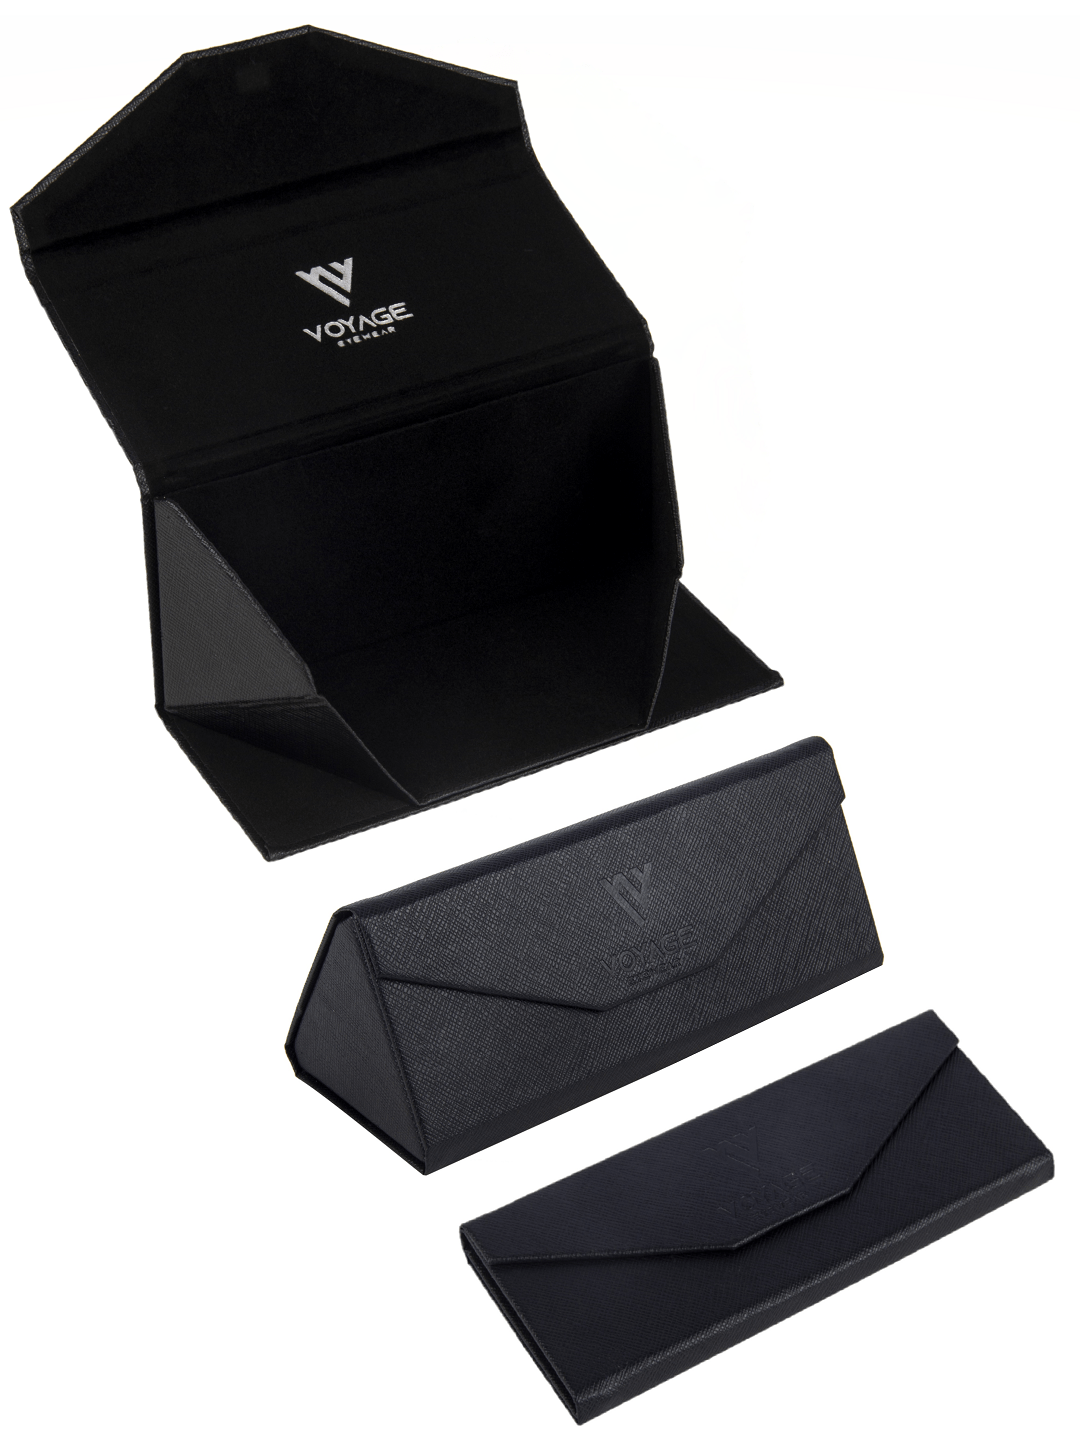 Voyage Exclusive Copper & Black Polarized Wrap Around Sunglasses for Men & Women - PMG4021